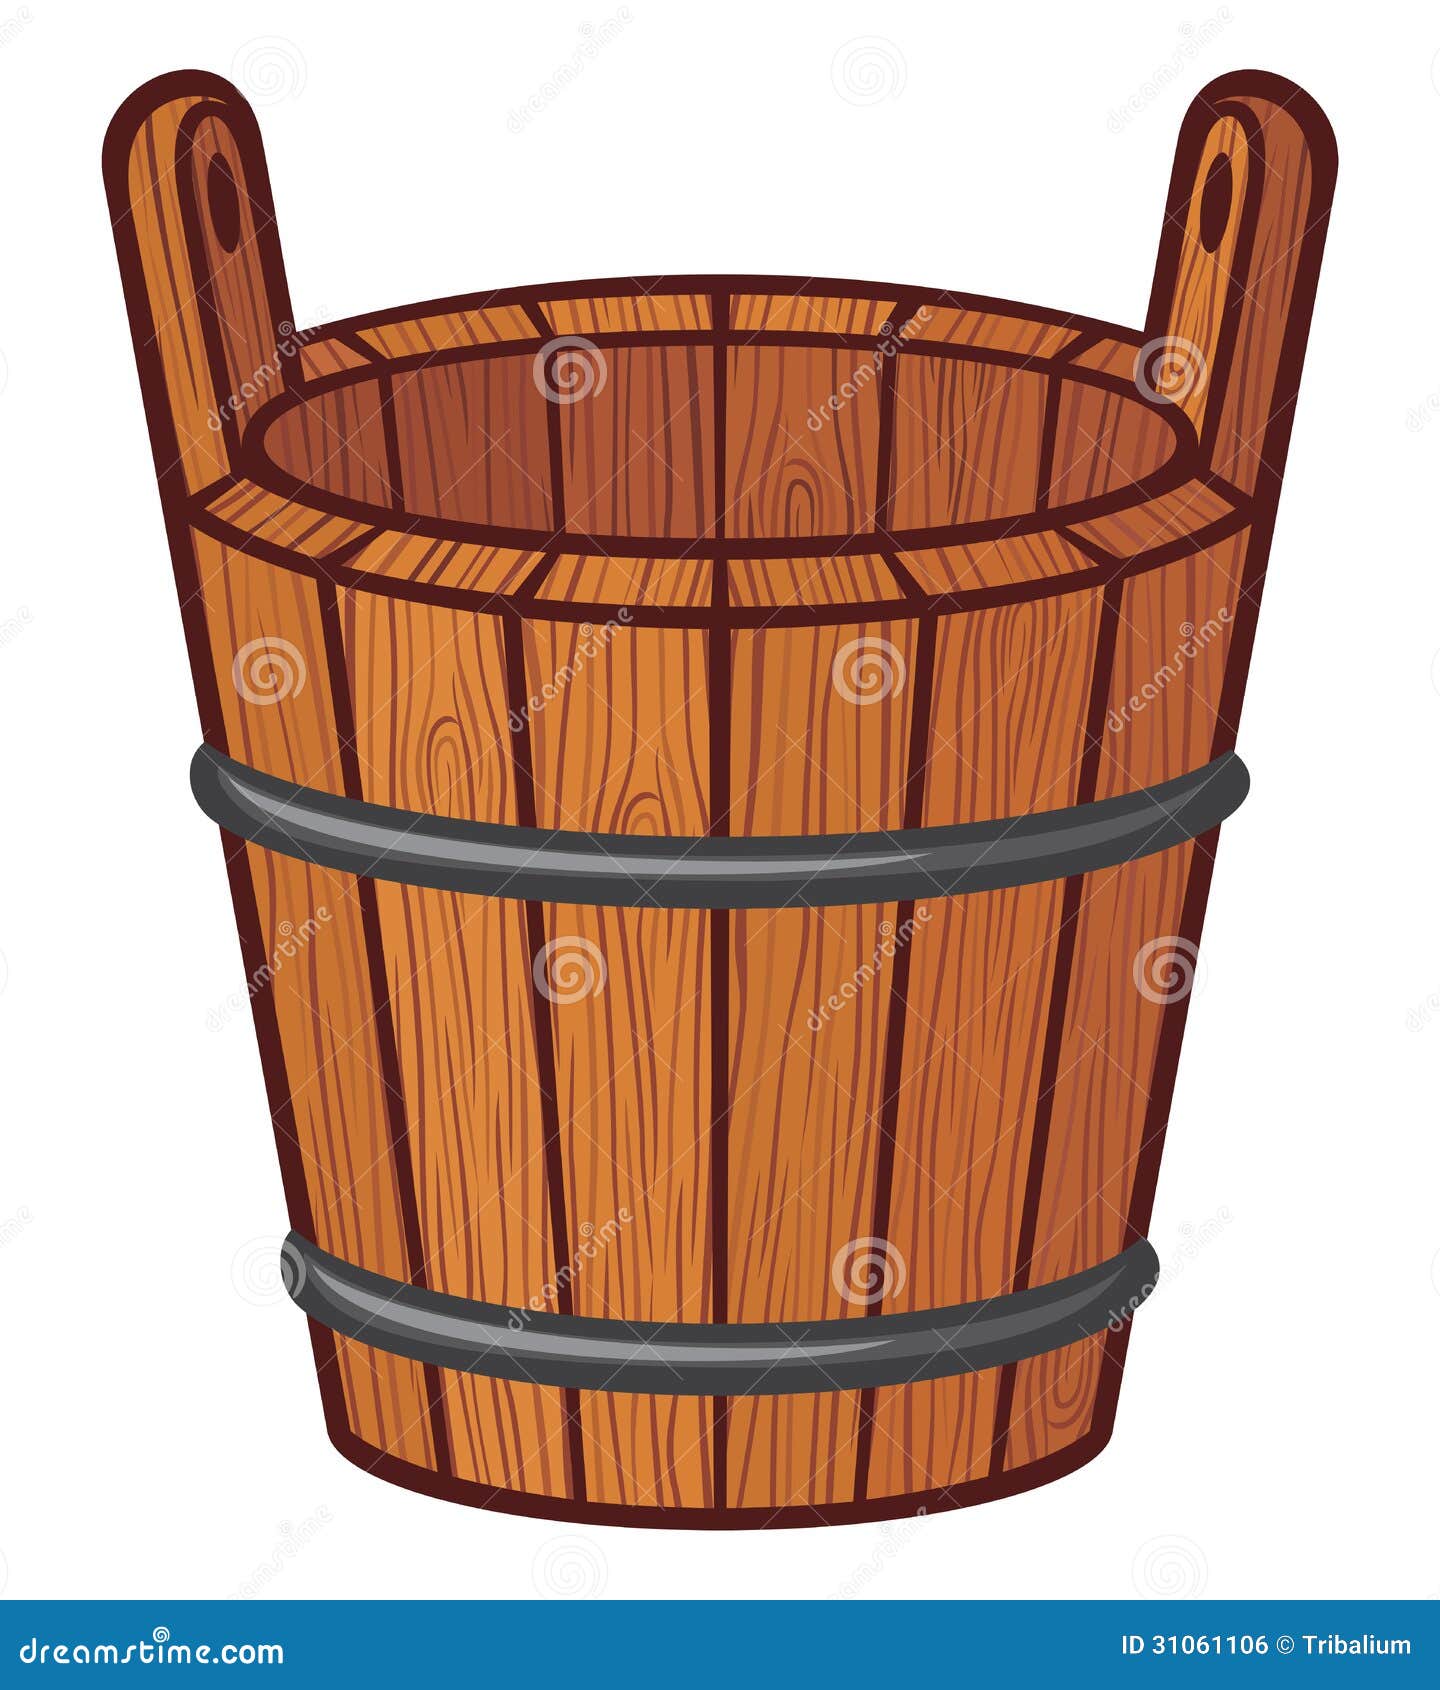 Wooden Bucket Royalty Free Stock Image  Image: 31061106